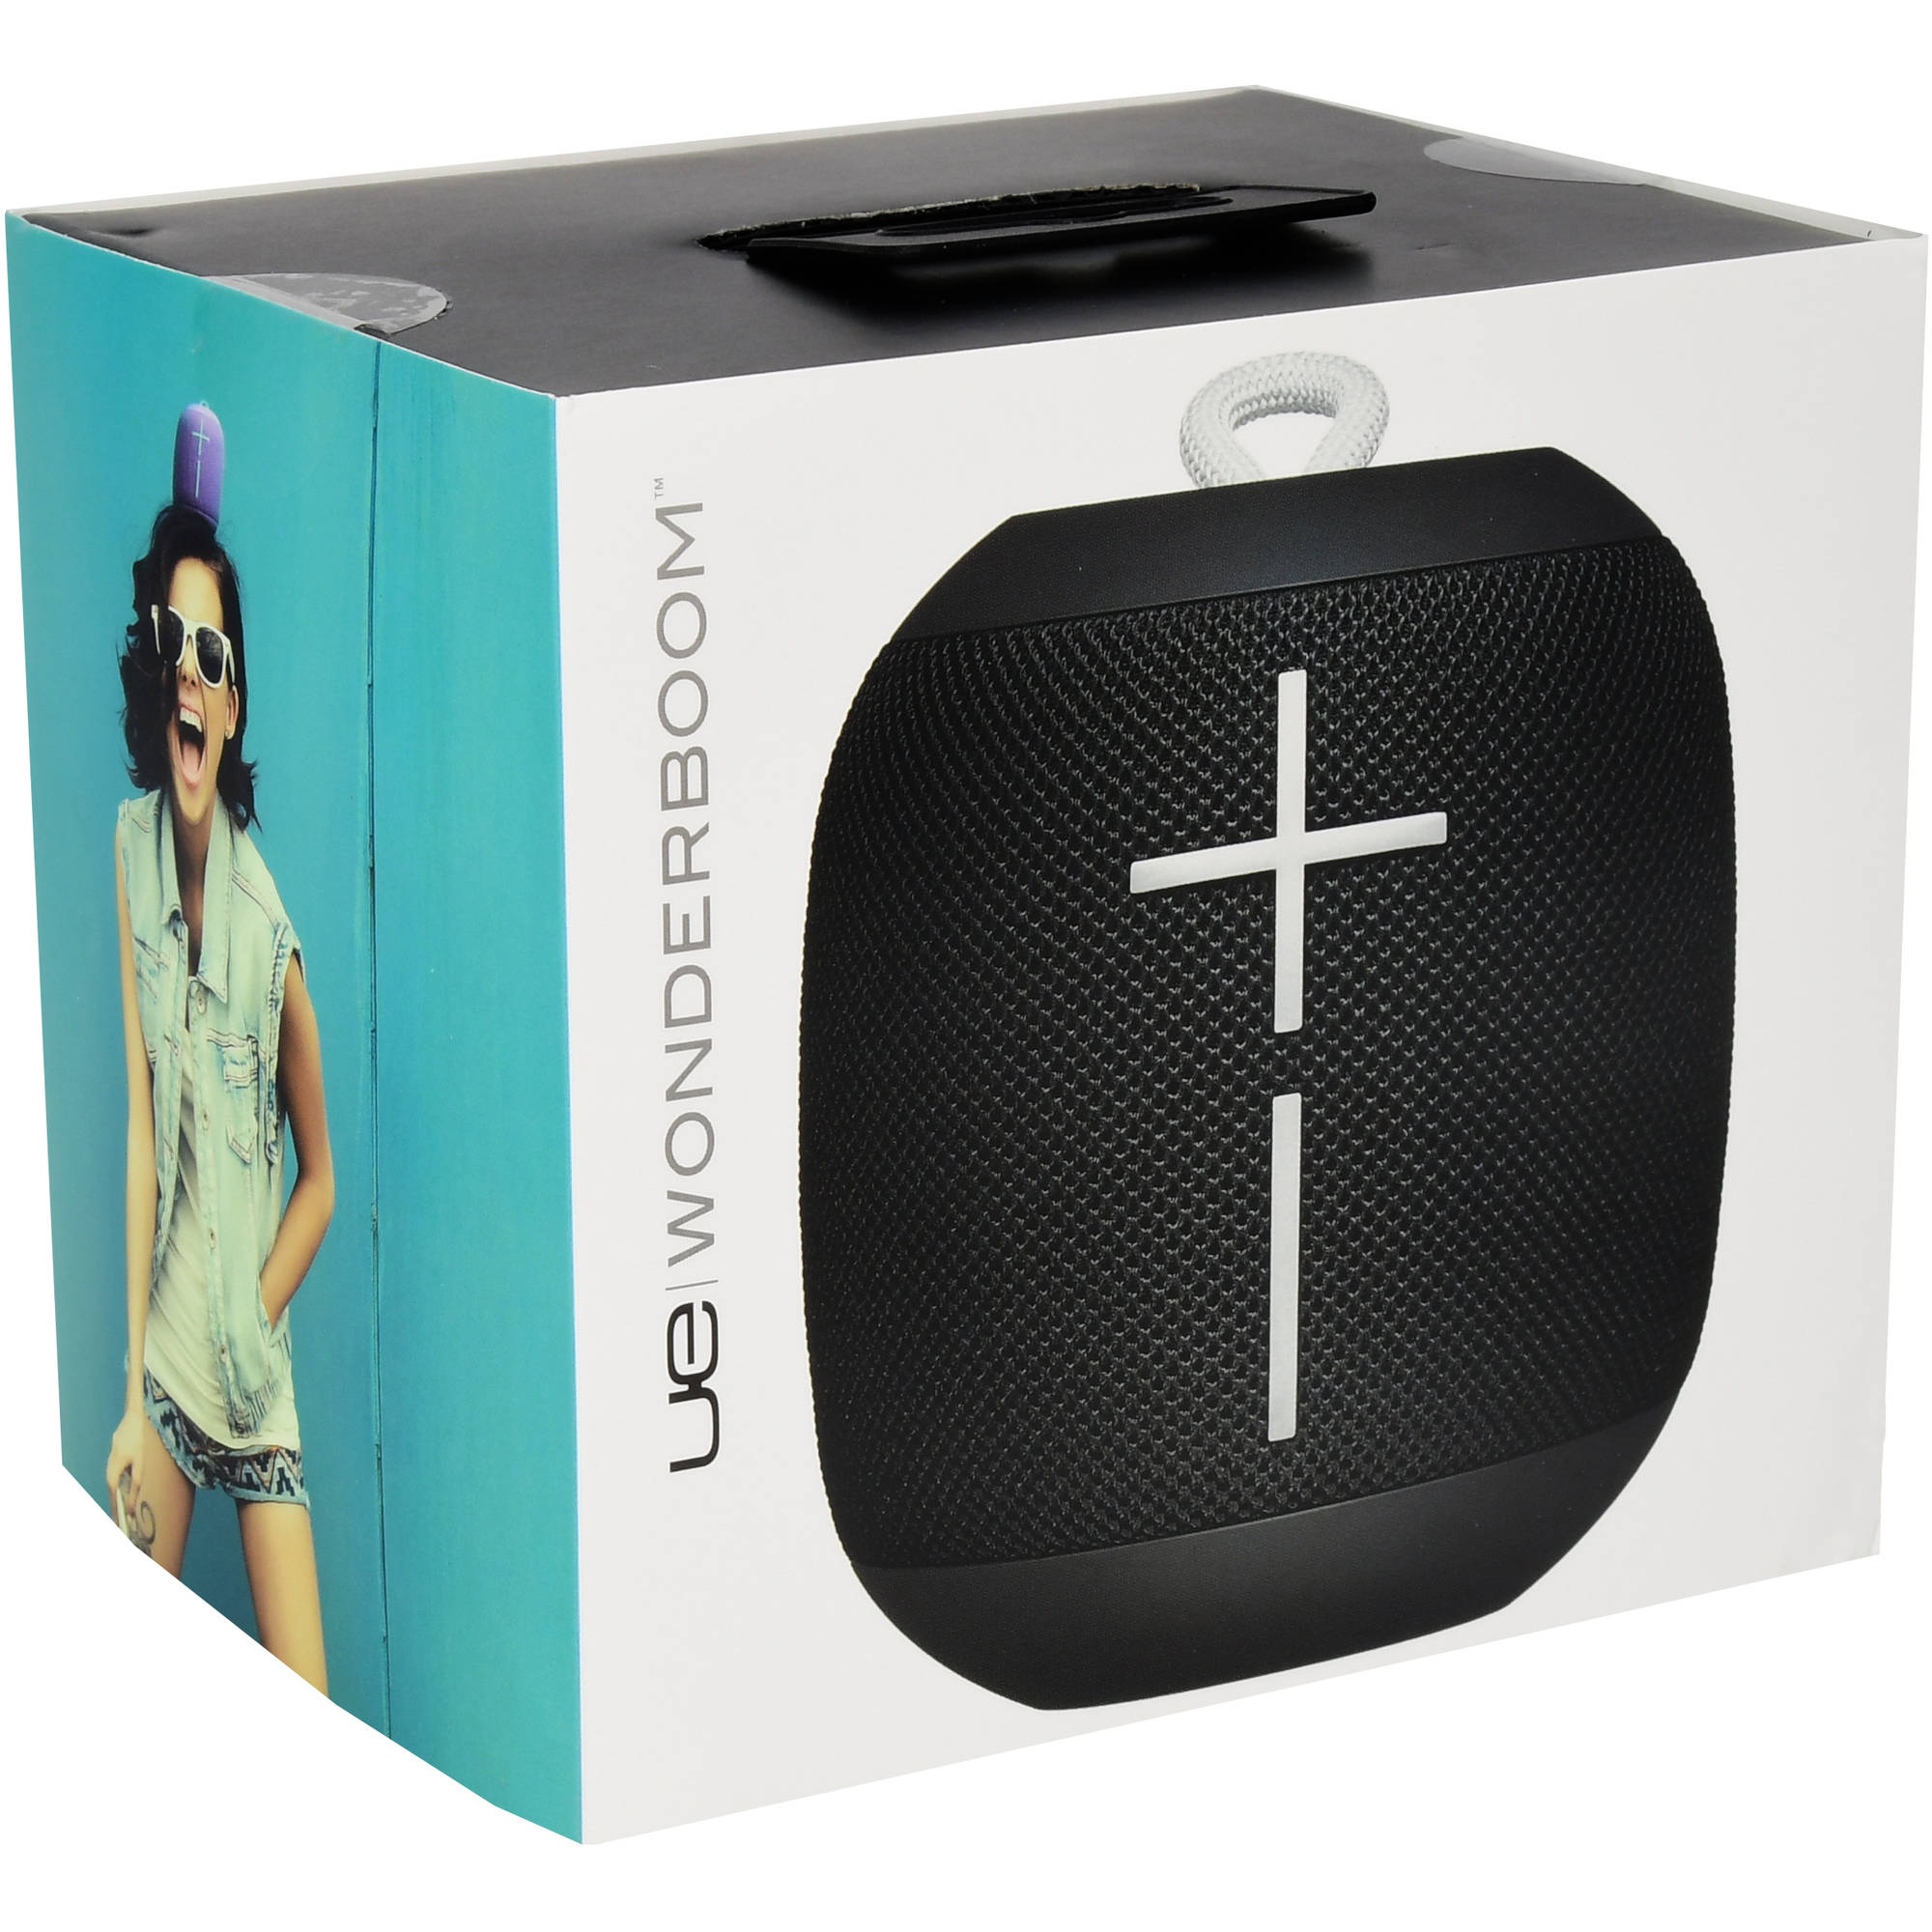 Logitech Ultimate Ears WonderBoom Portable Bluetooth Wireless Speaker - Black - image 2 of 3